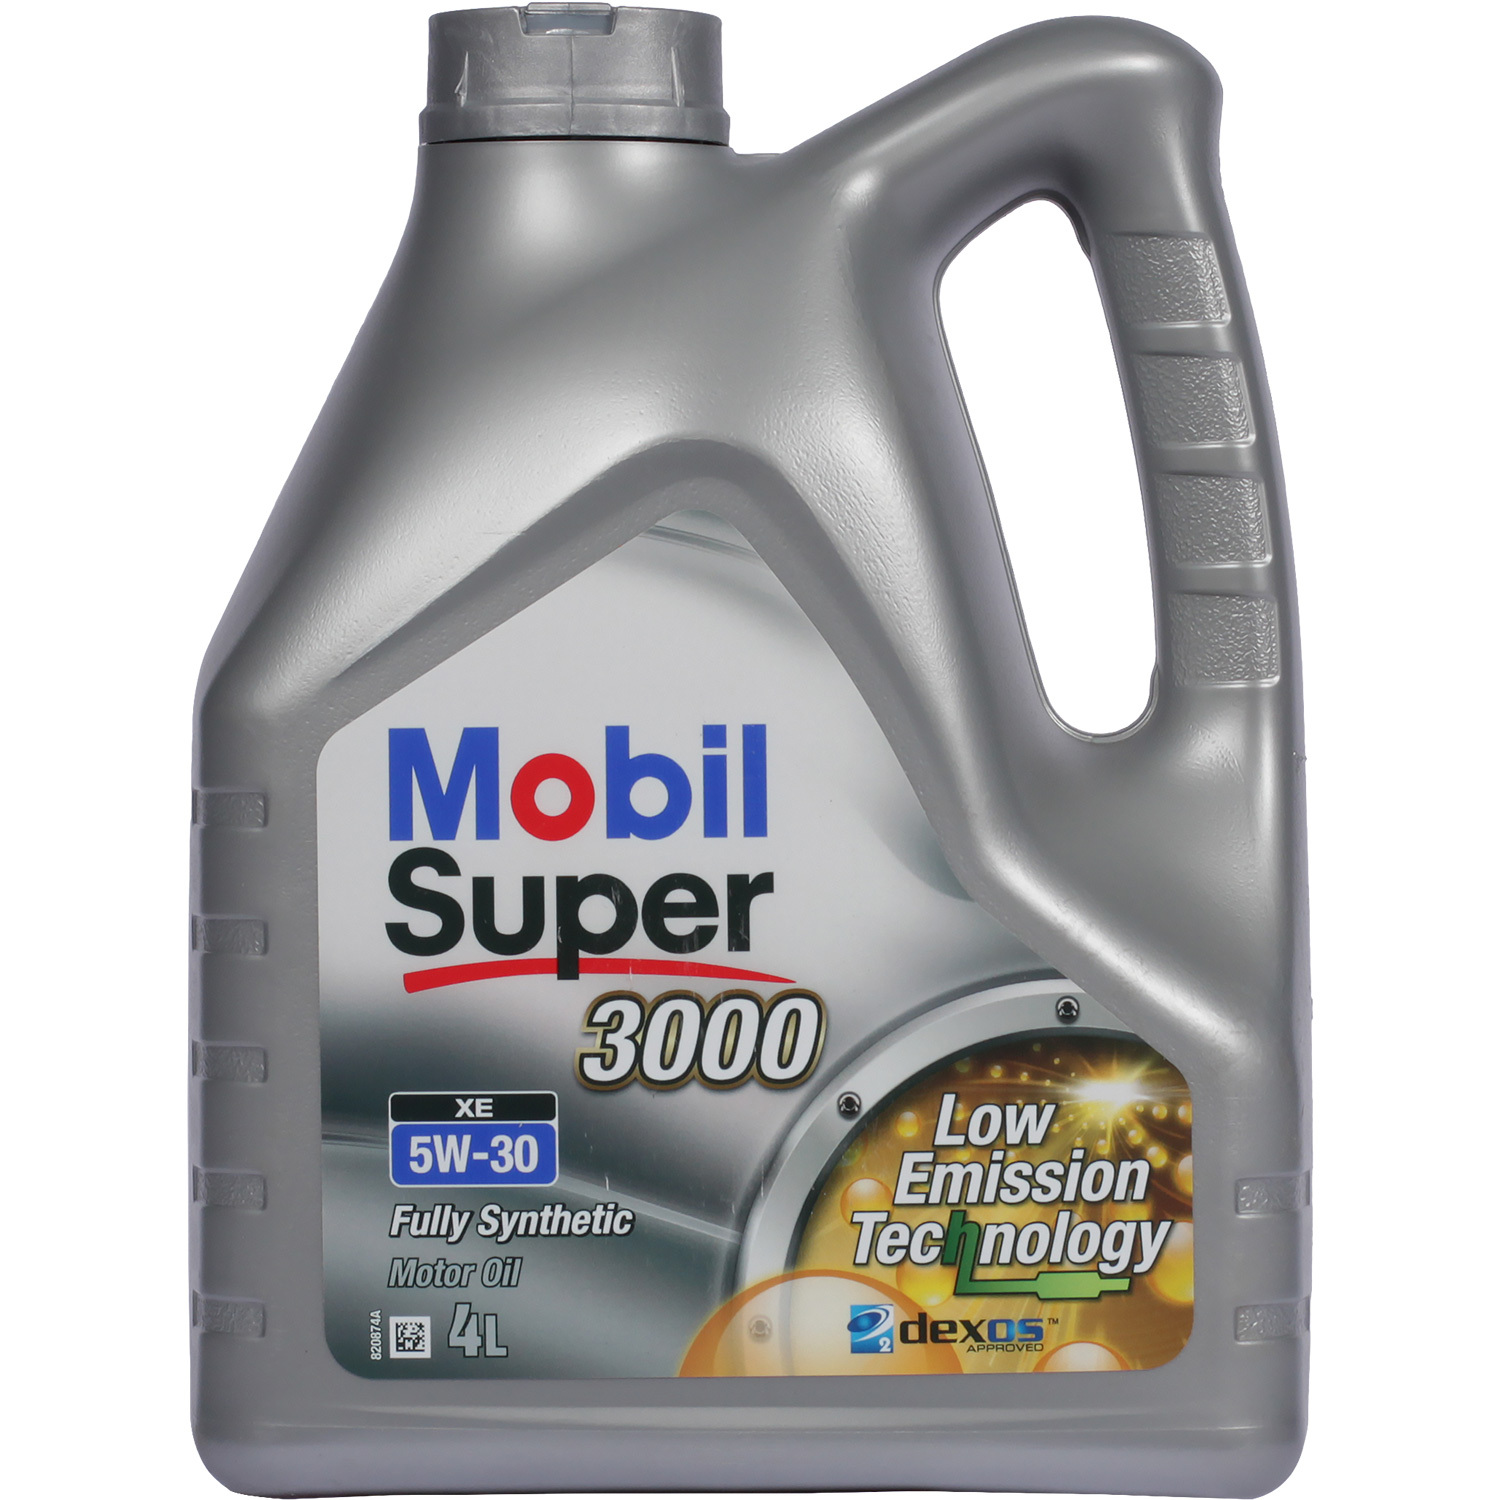 Mobil Моторное масло Mobil Super 3000 XE 5W-30, 4 л масло моторное mobil super 3000 xe 5w–30 синтетическое 1 л